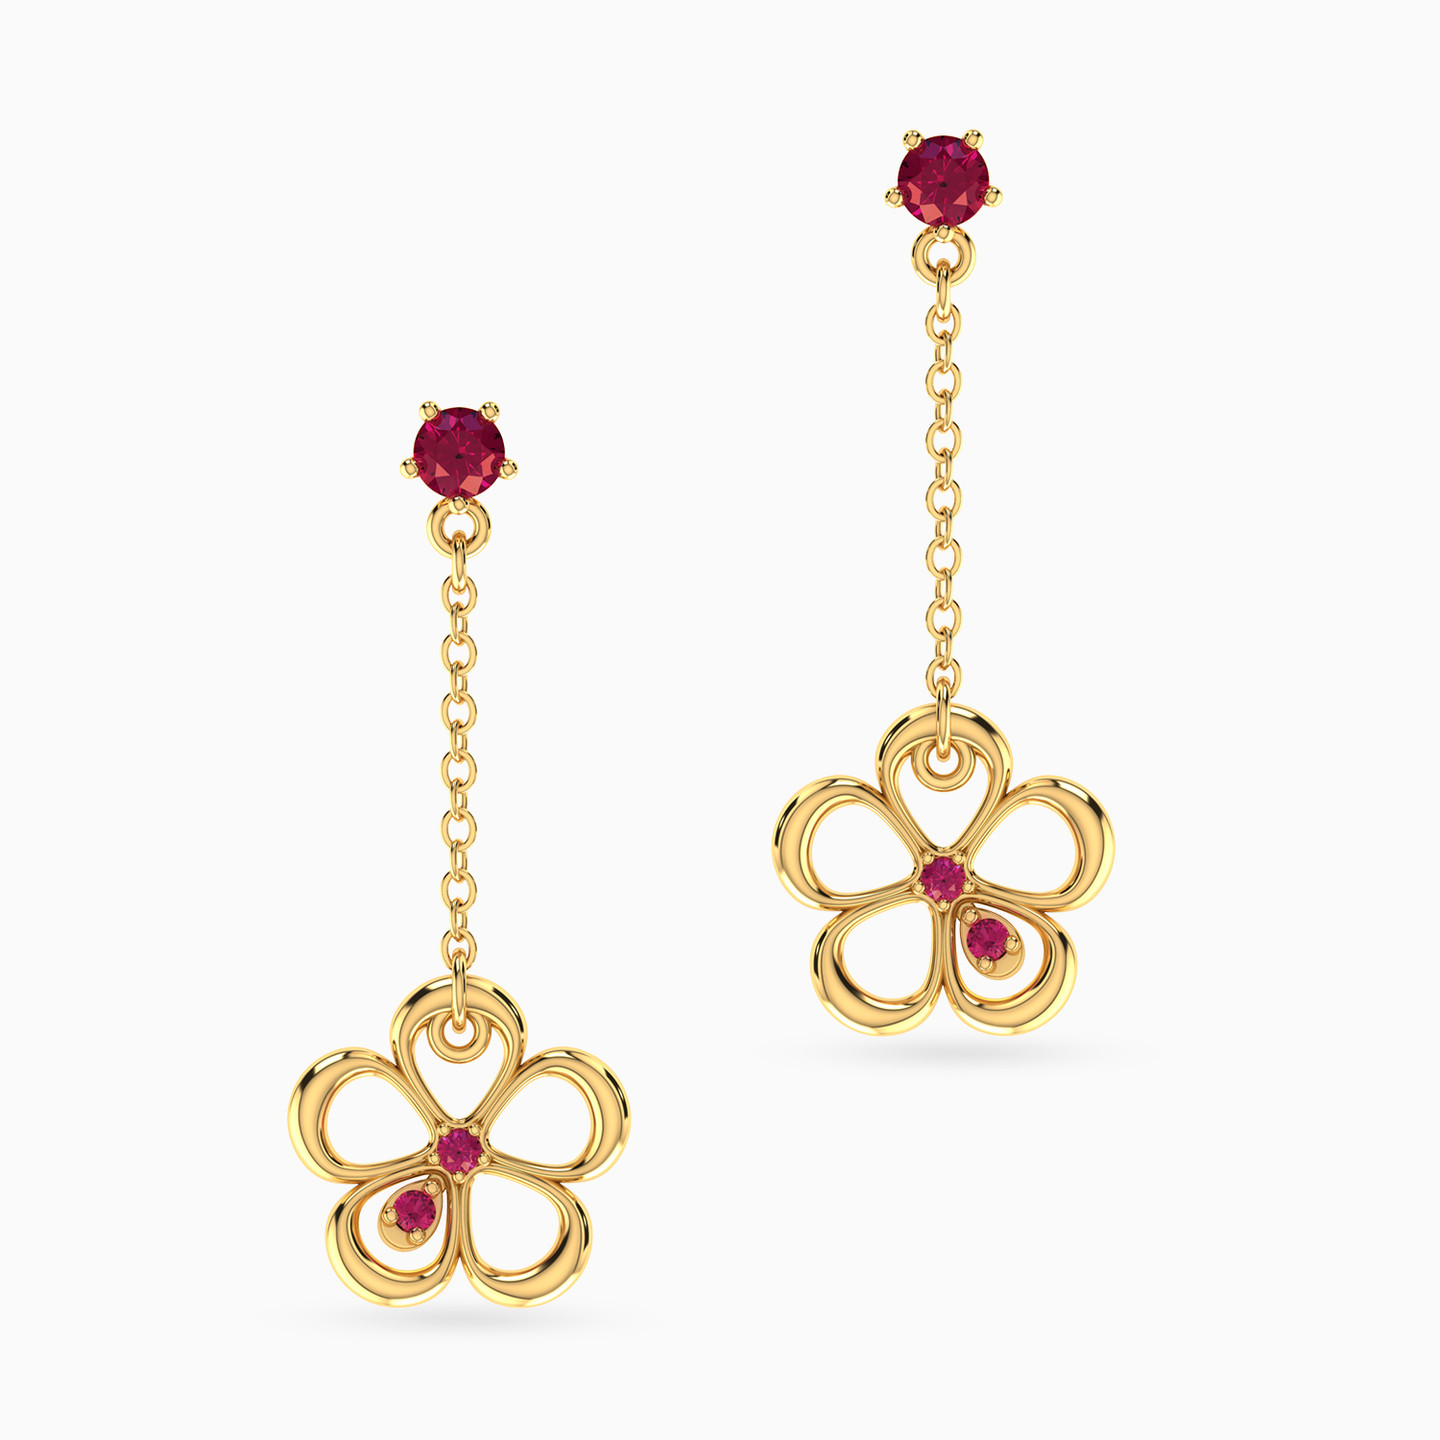 Flower Shaped Colored Stones Drop Earrings in 18K Gold